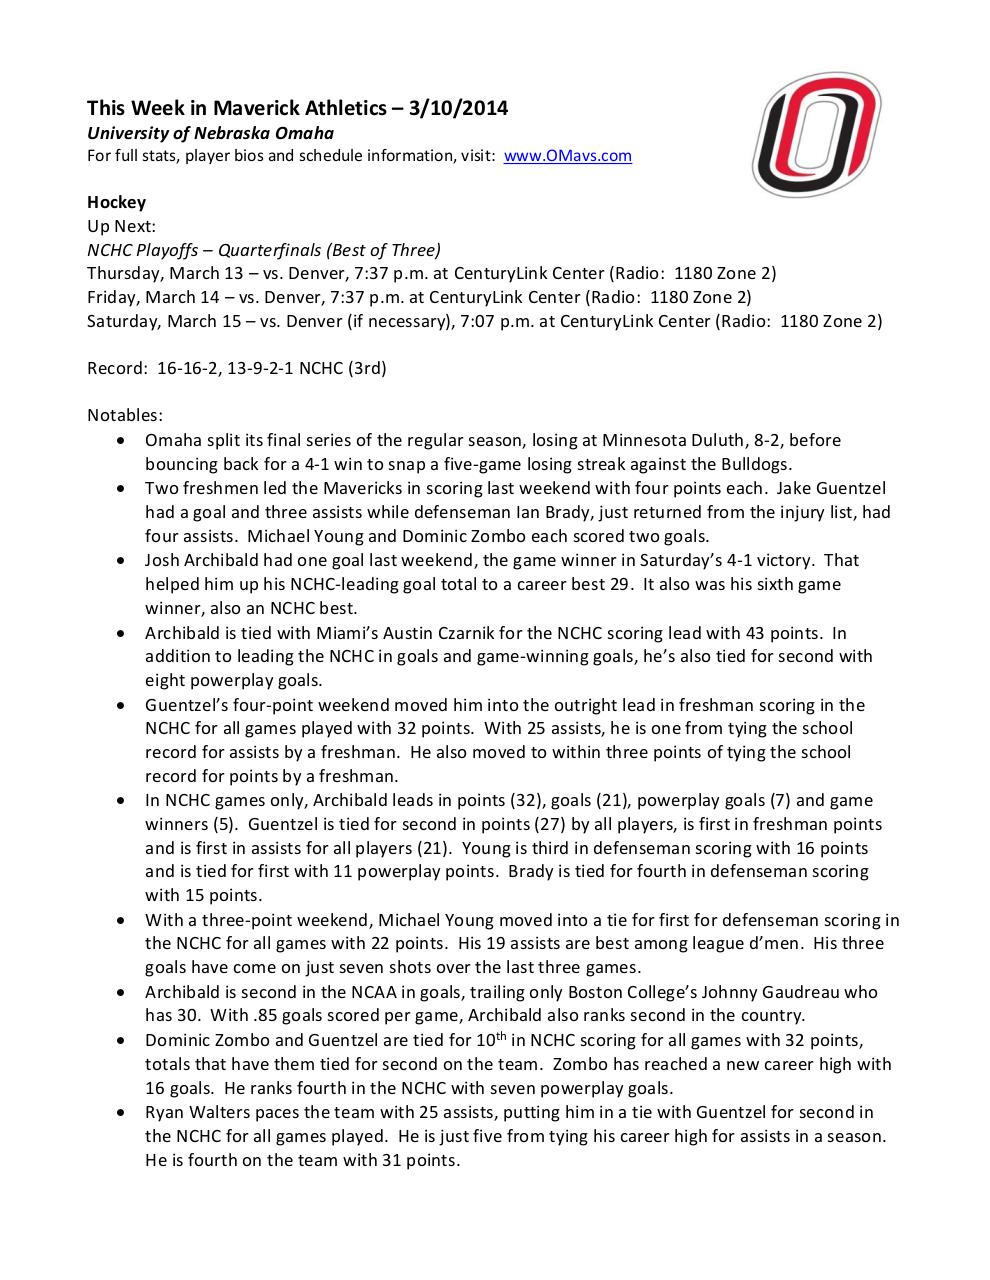 This Week in Maverick Athletics 3-10-14.pdf - page 1/6